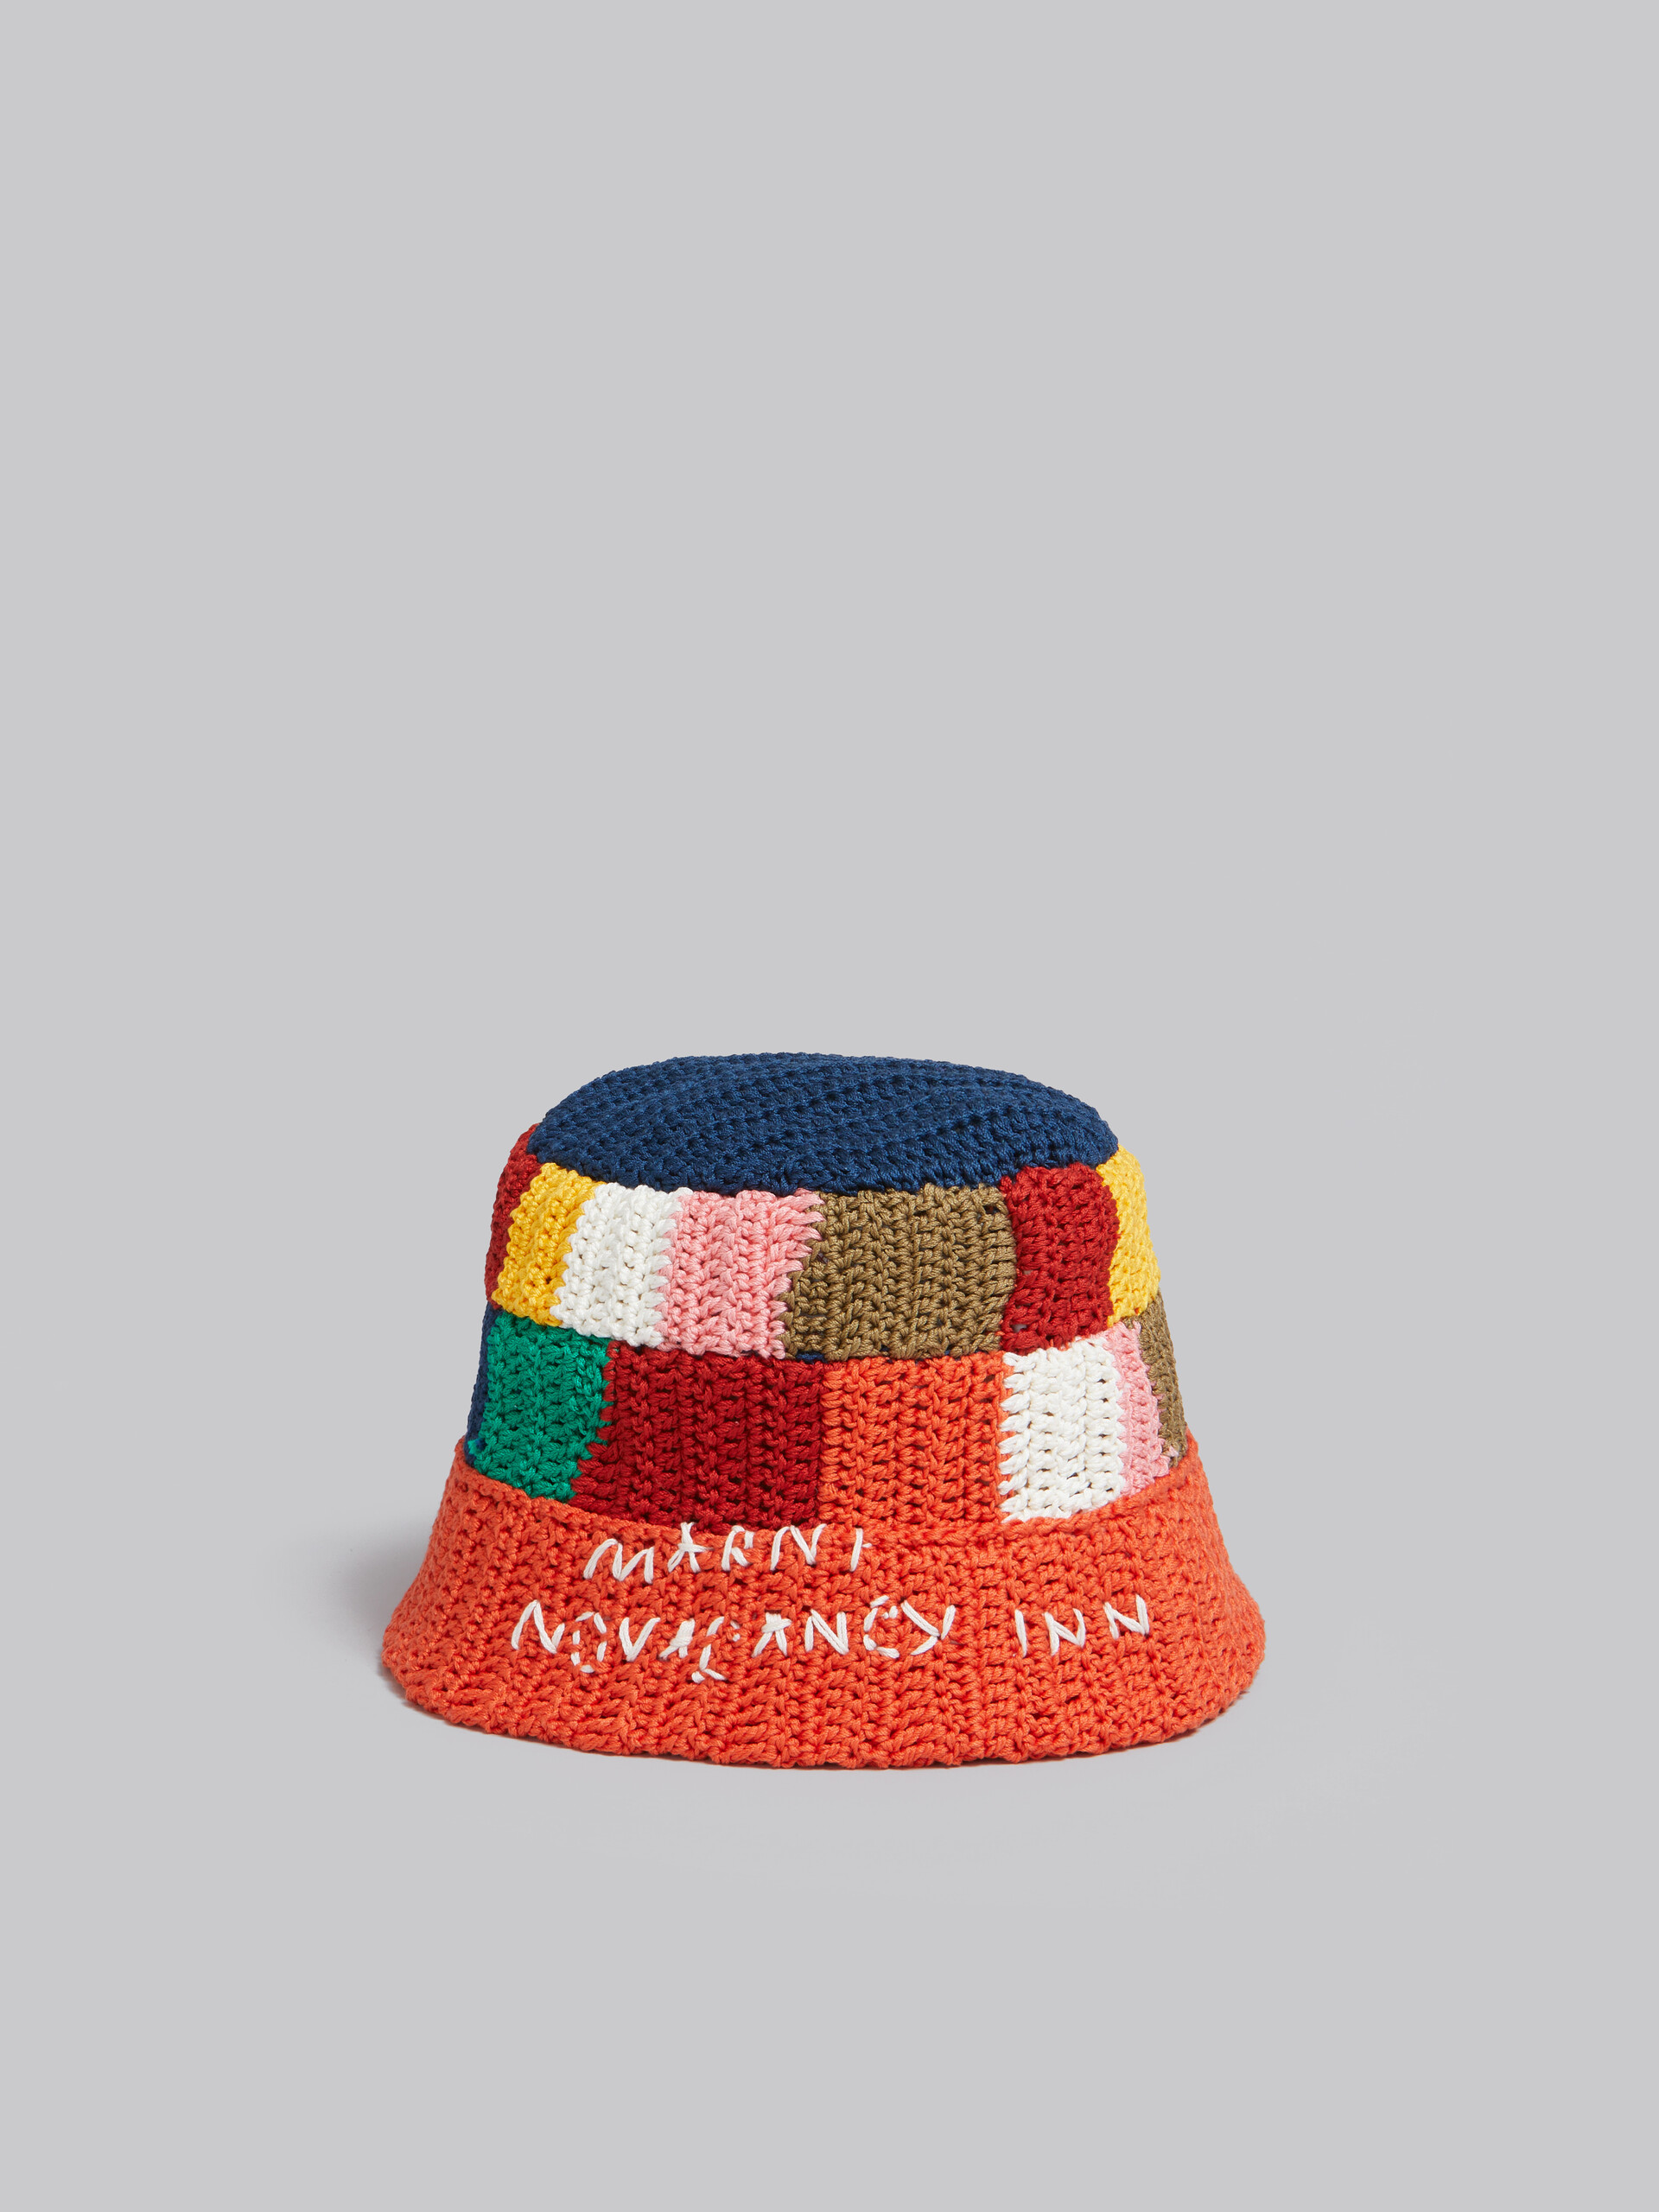 Marni x No Vacancy Inn - Multicolour cotton-knit bucket hat - Hats - Image 3